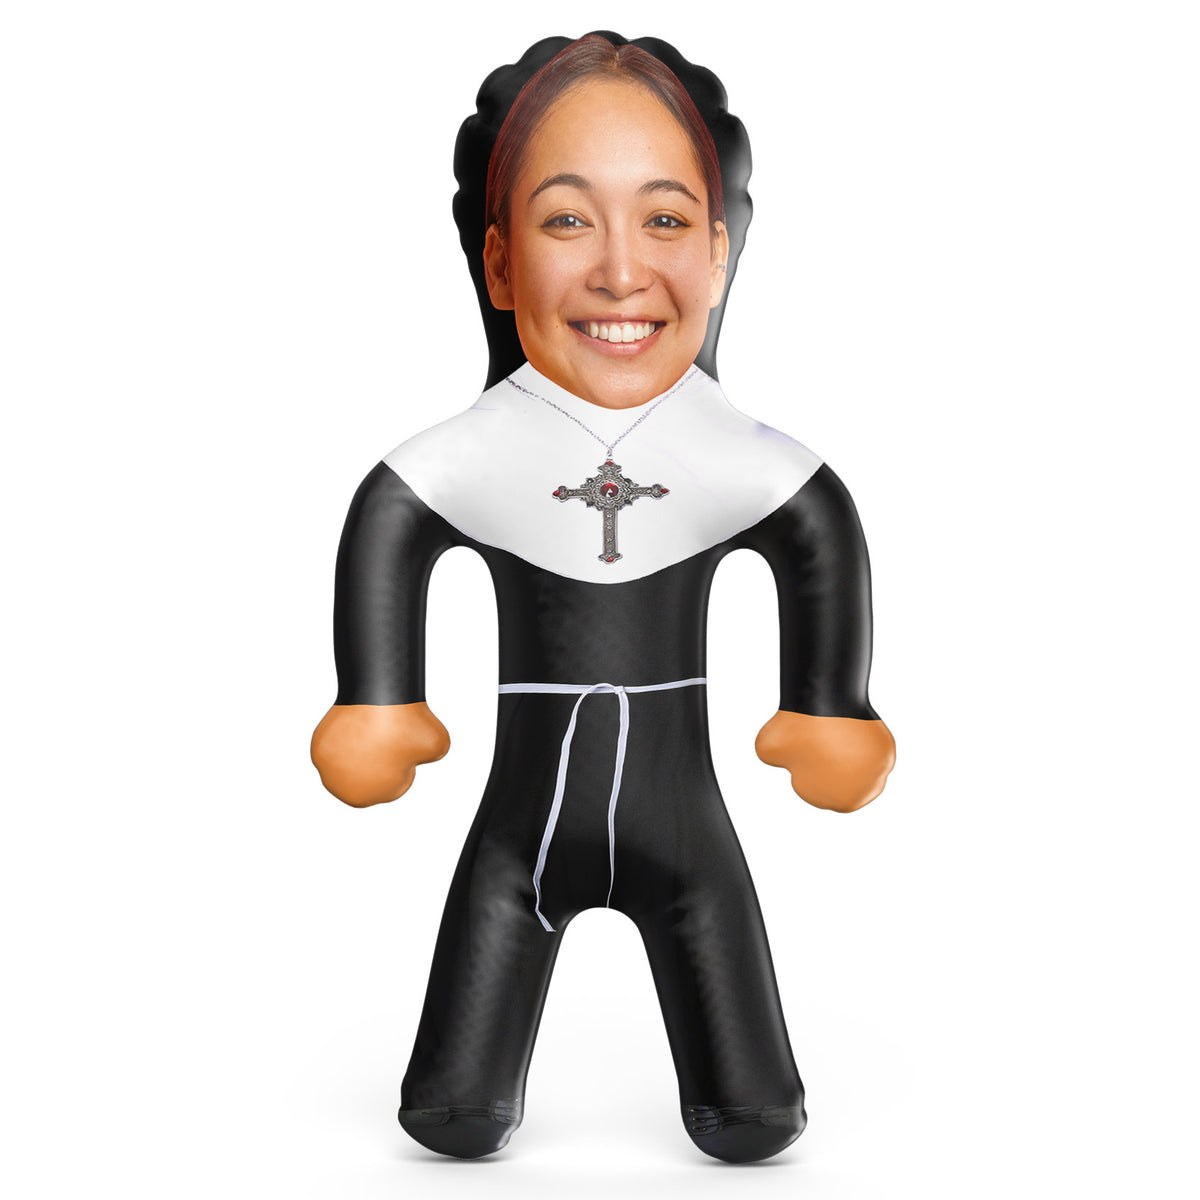 Nun Inflatable Doll - Nun Blow Up Doll